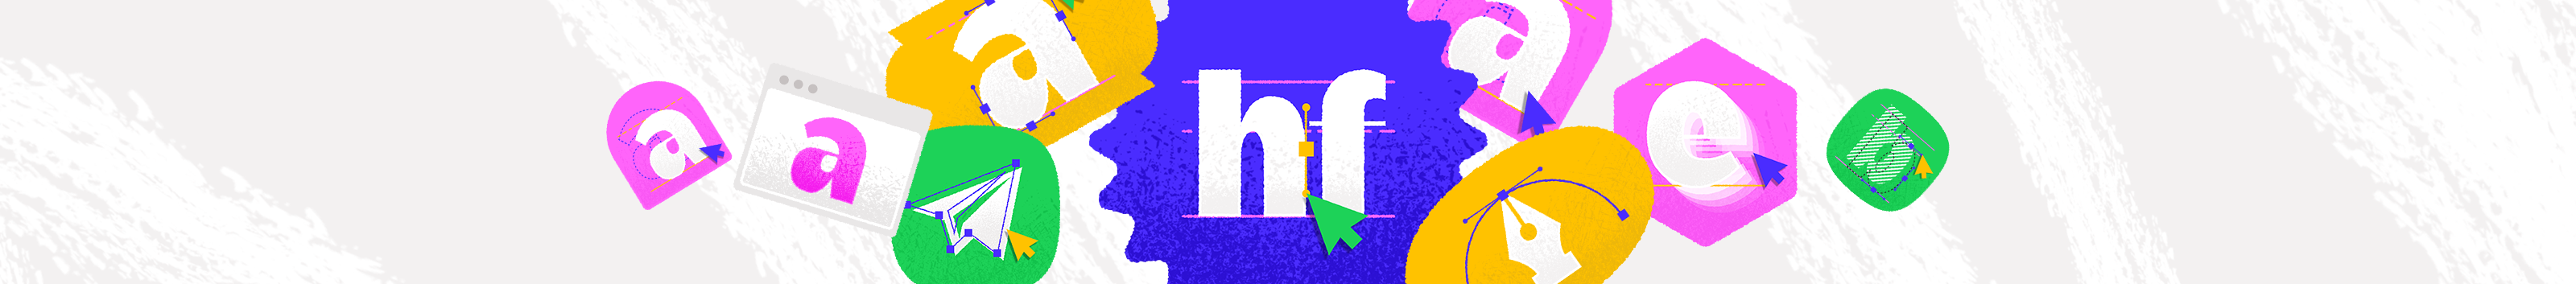 Headfonts Store's profile banner